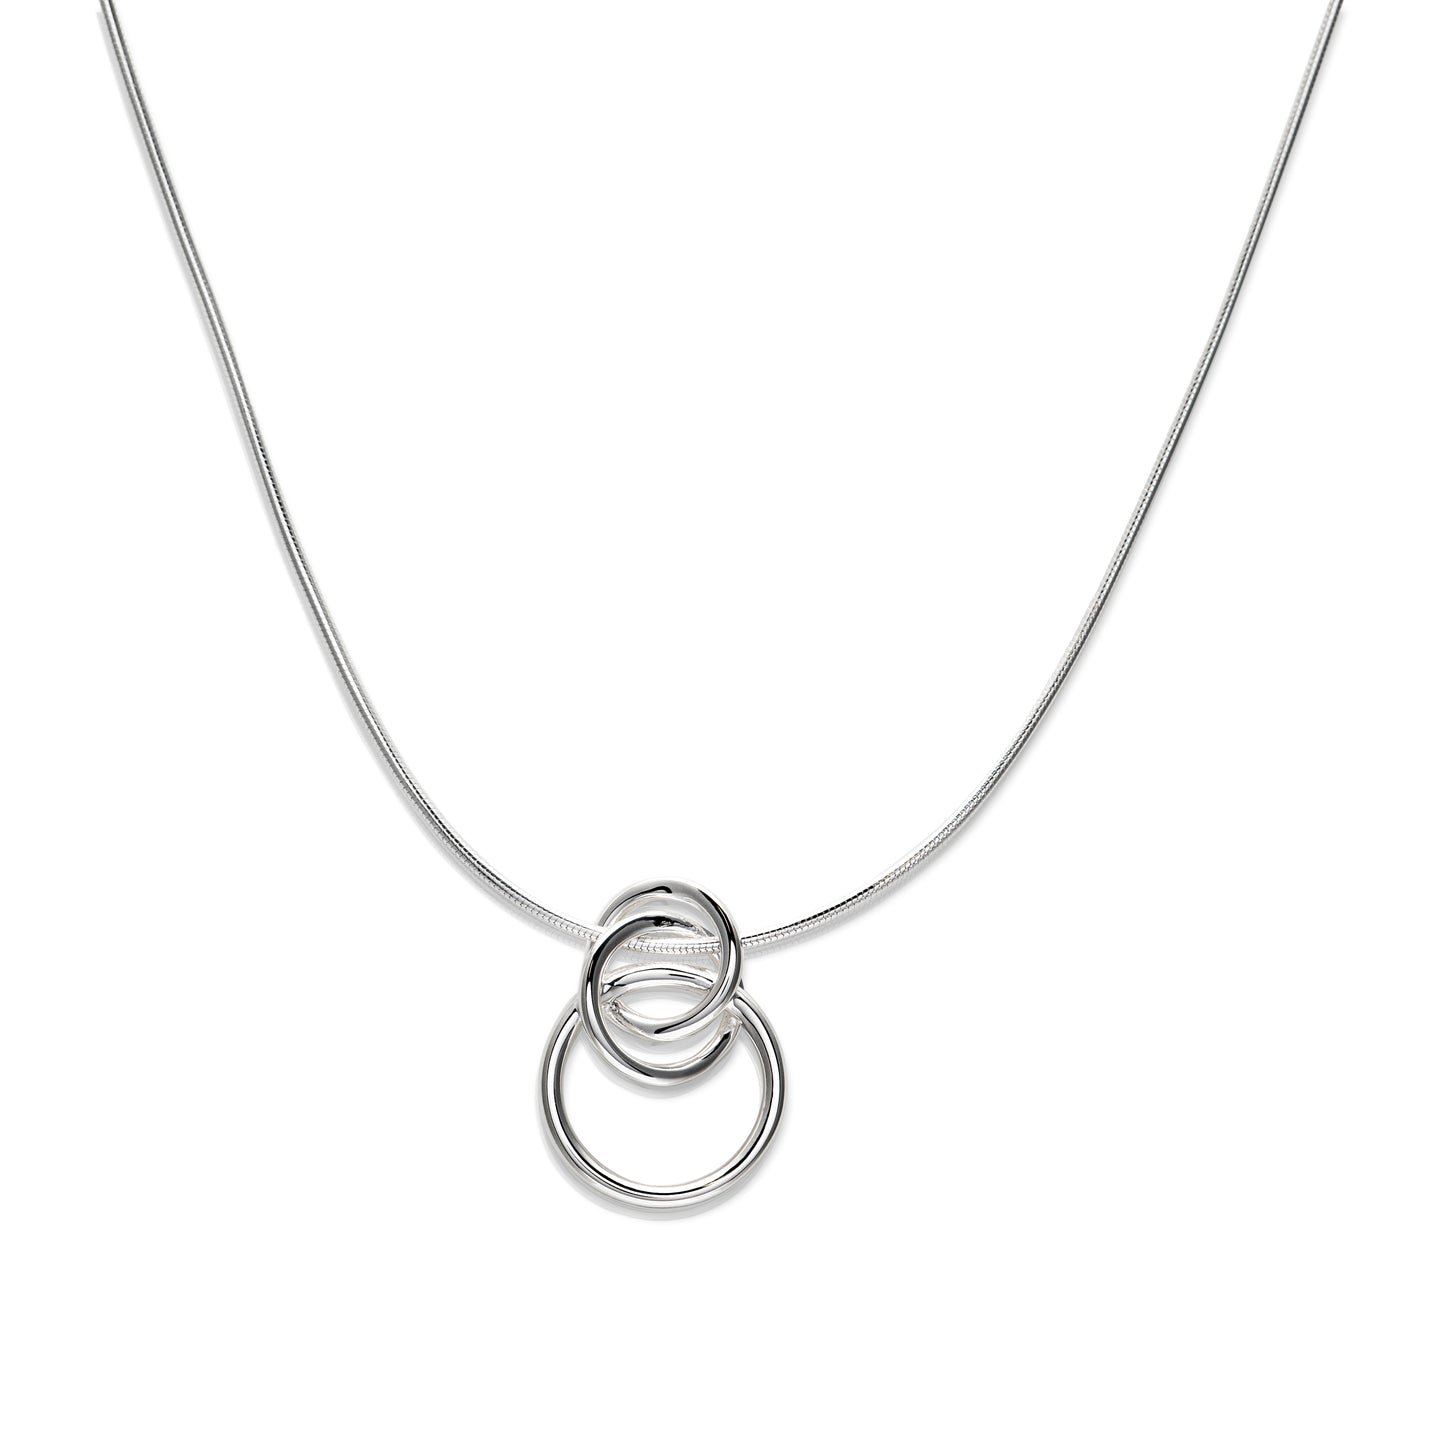 Silver interlocking circle and knot design pendant